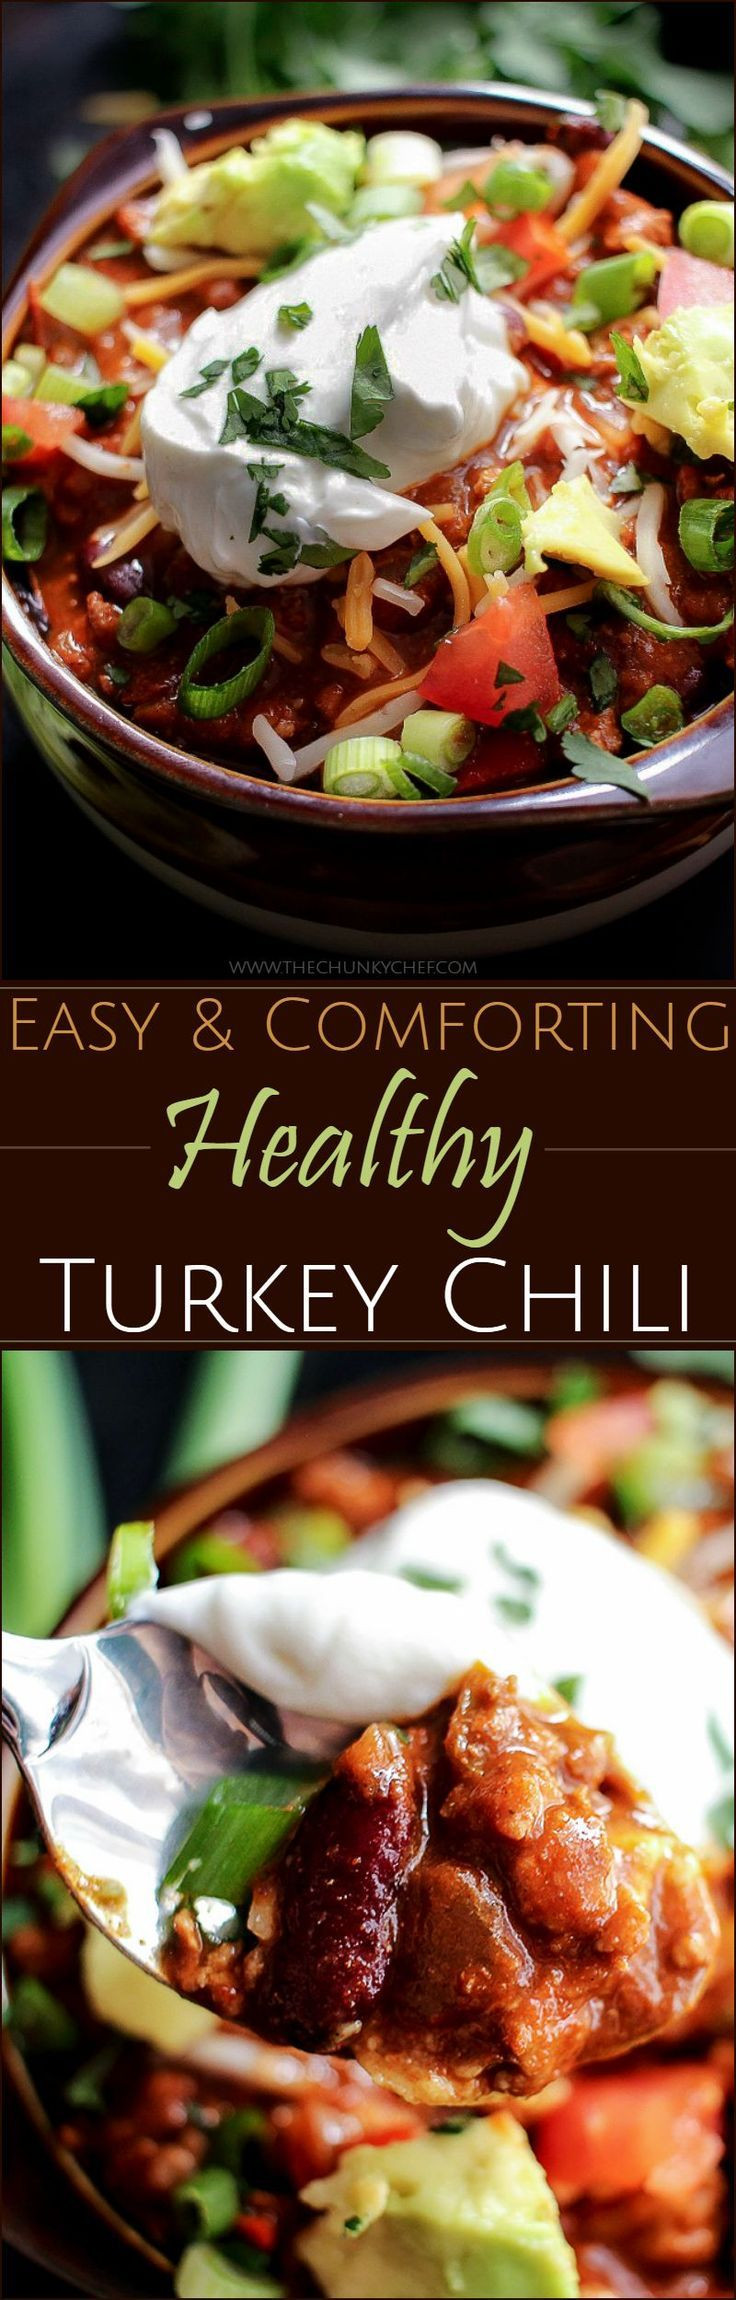 Heart Healthy Winter Recipes
 Best 25 Healthy turkey chili ideas on Pinterest